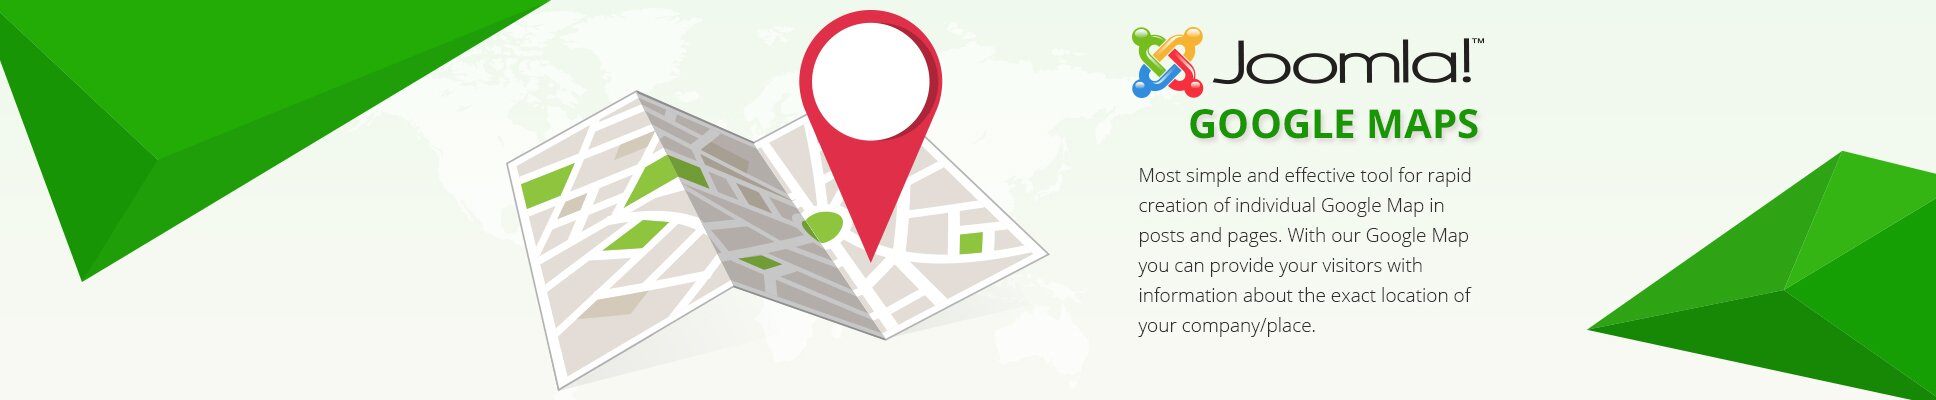 Joomla Google Maps Demo 1 Google Maps Layers